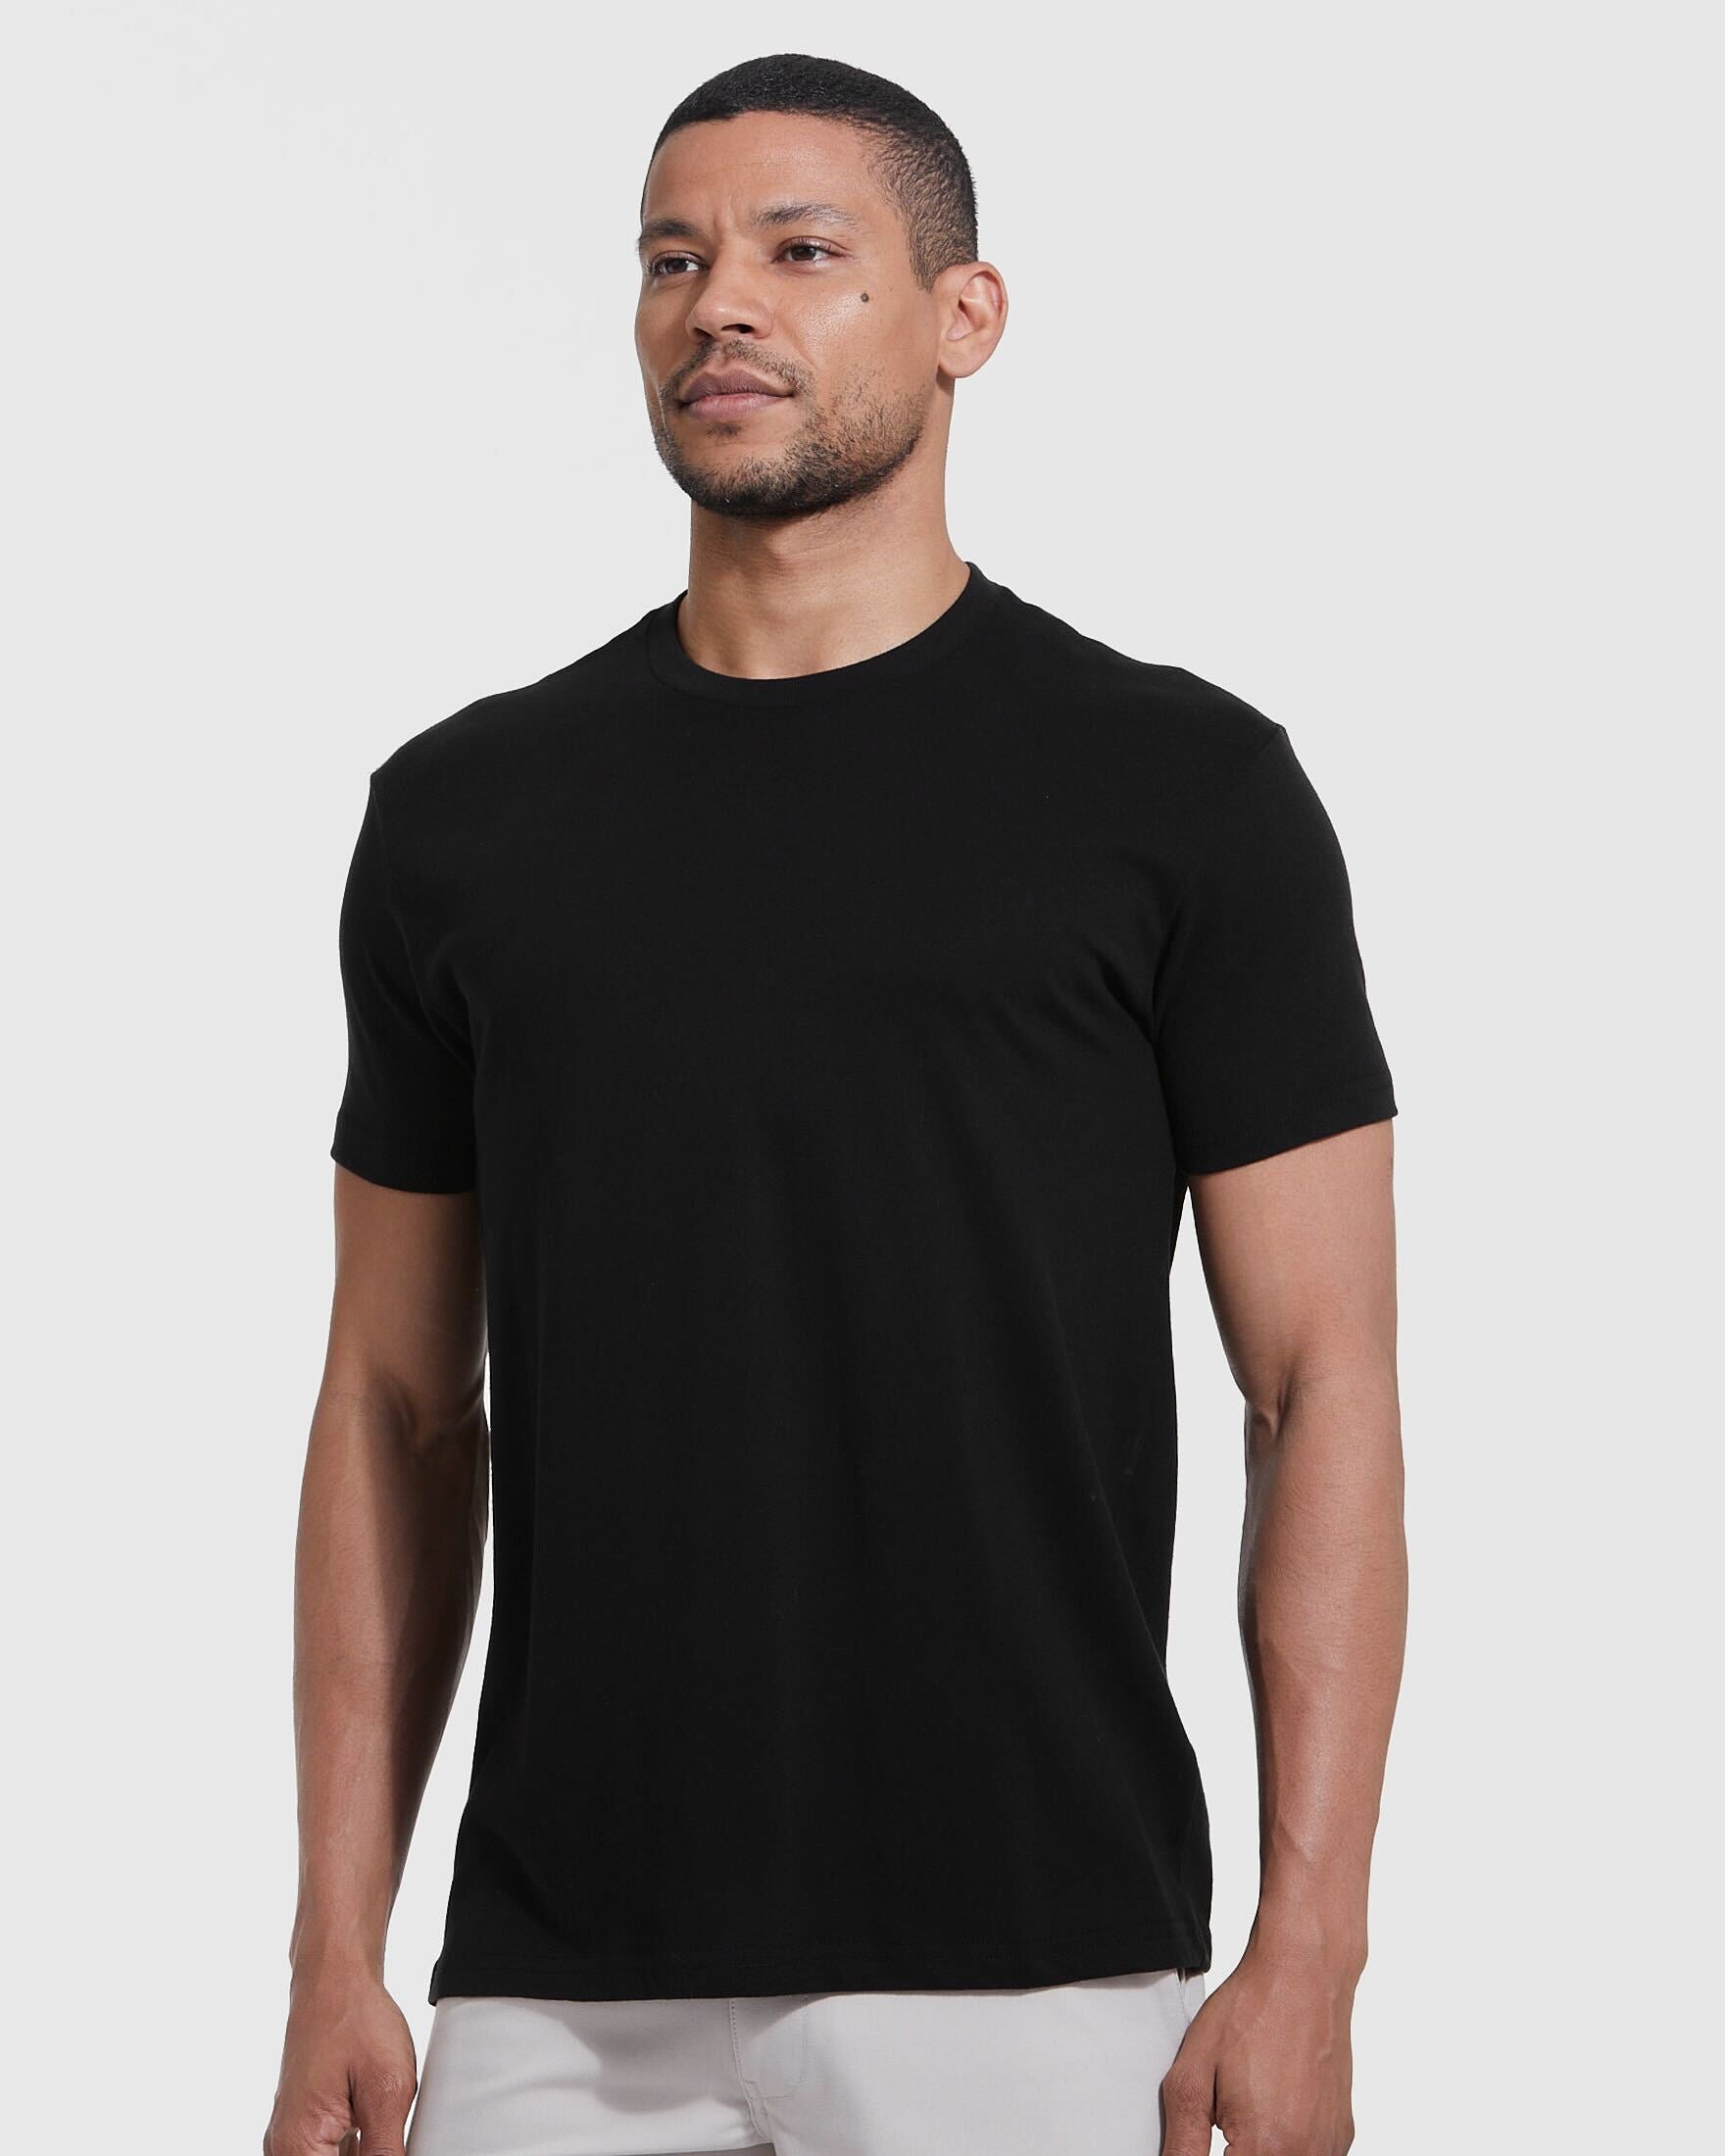 Black Crew T-Shirt